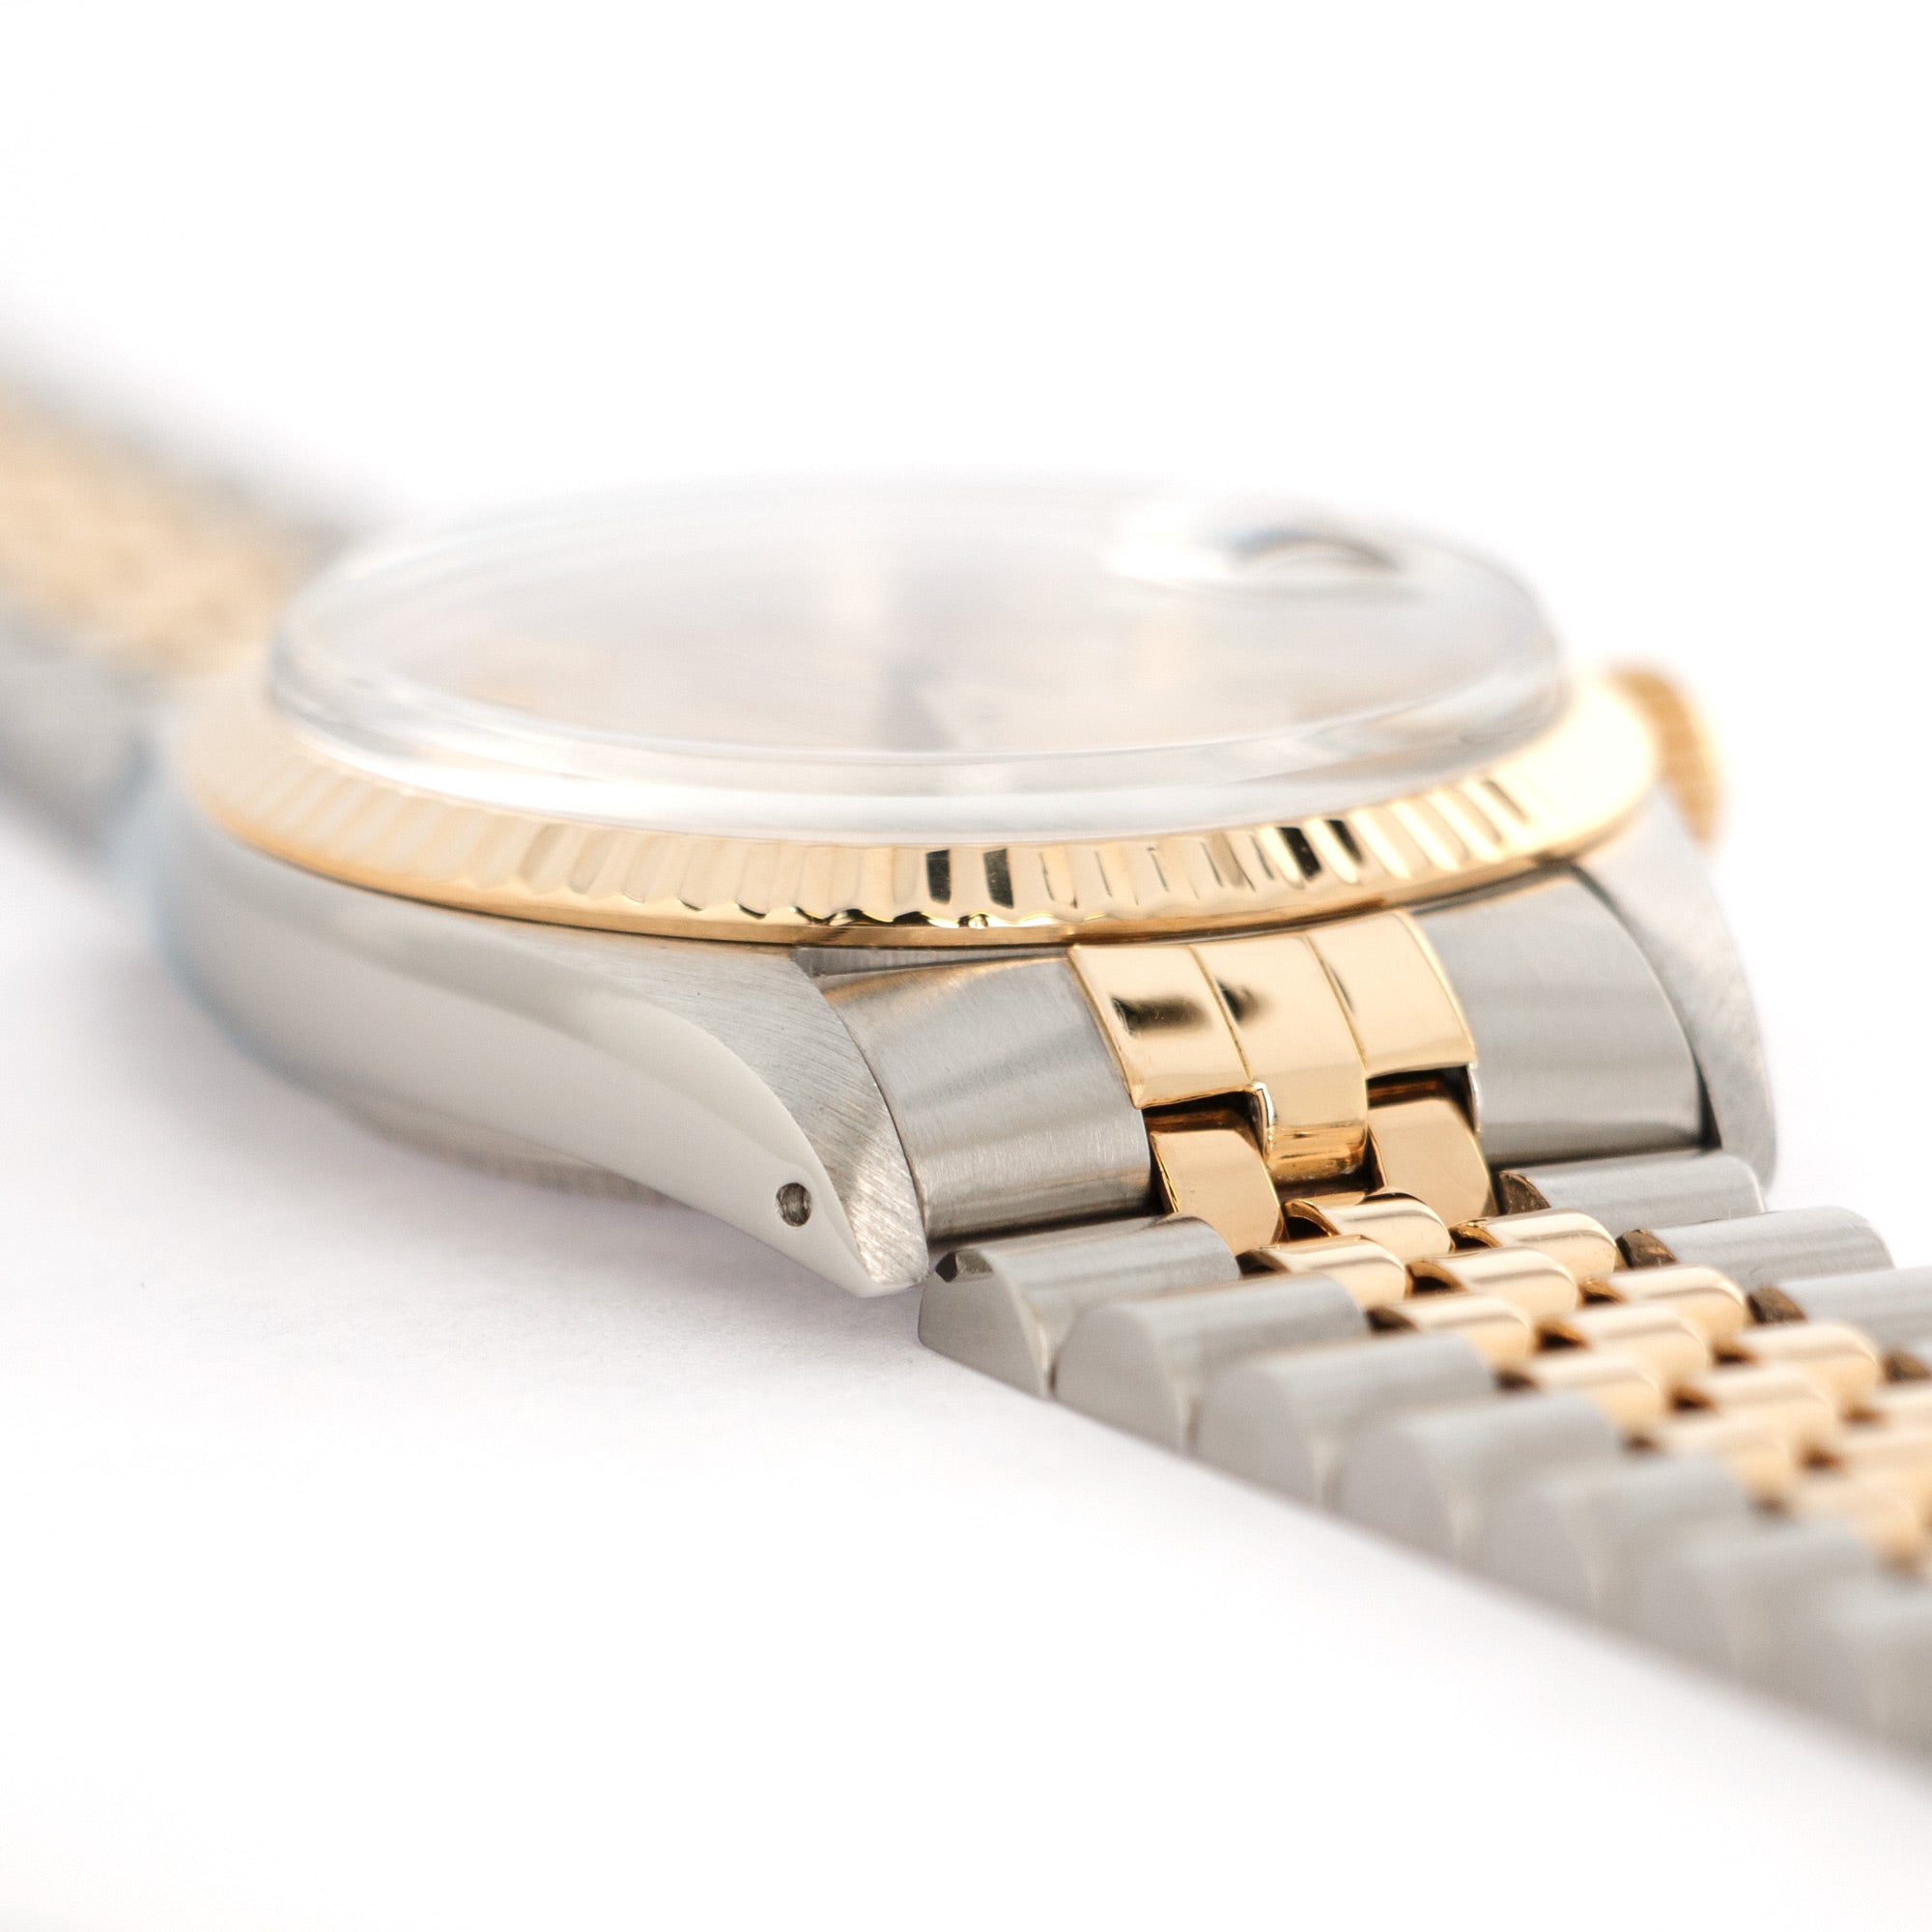 Rolex - Rolex Two-Tone Datejust Watch Ref. 16013, Retailed by Van Cleef & Arpels - The Keystone Watches